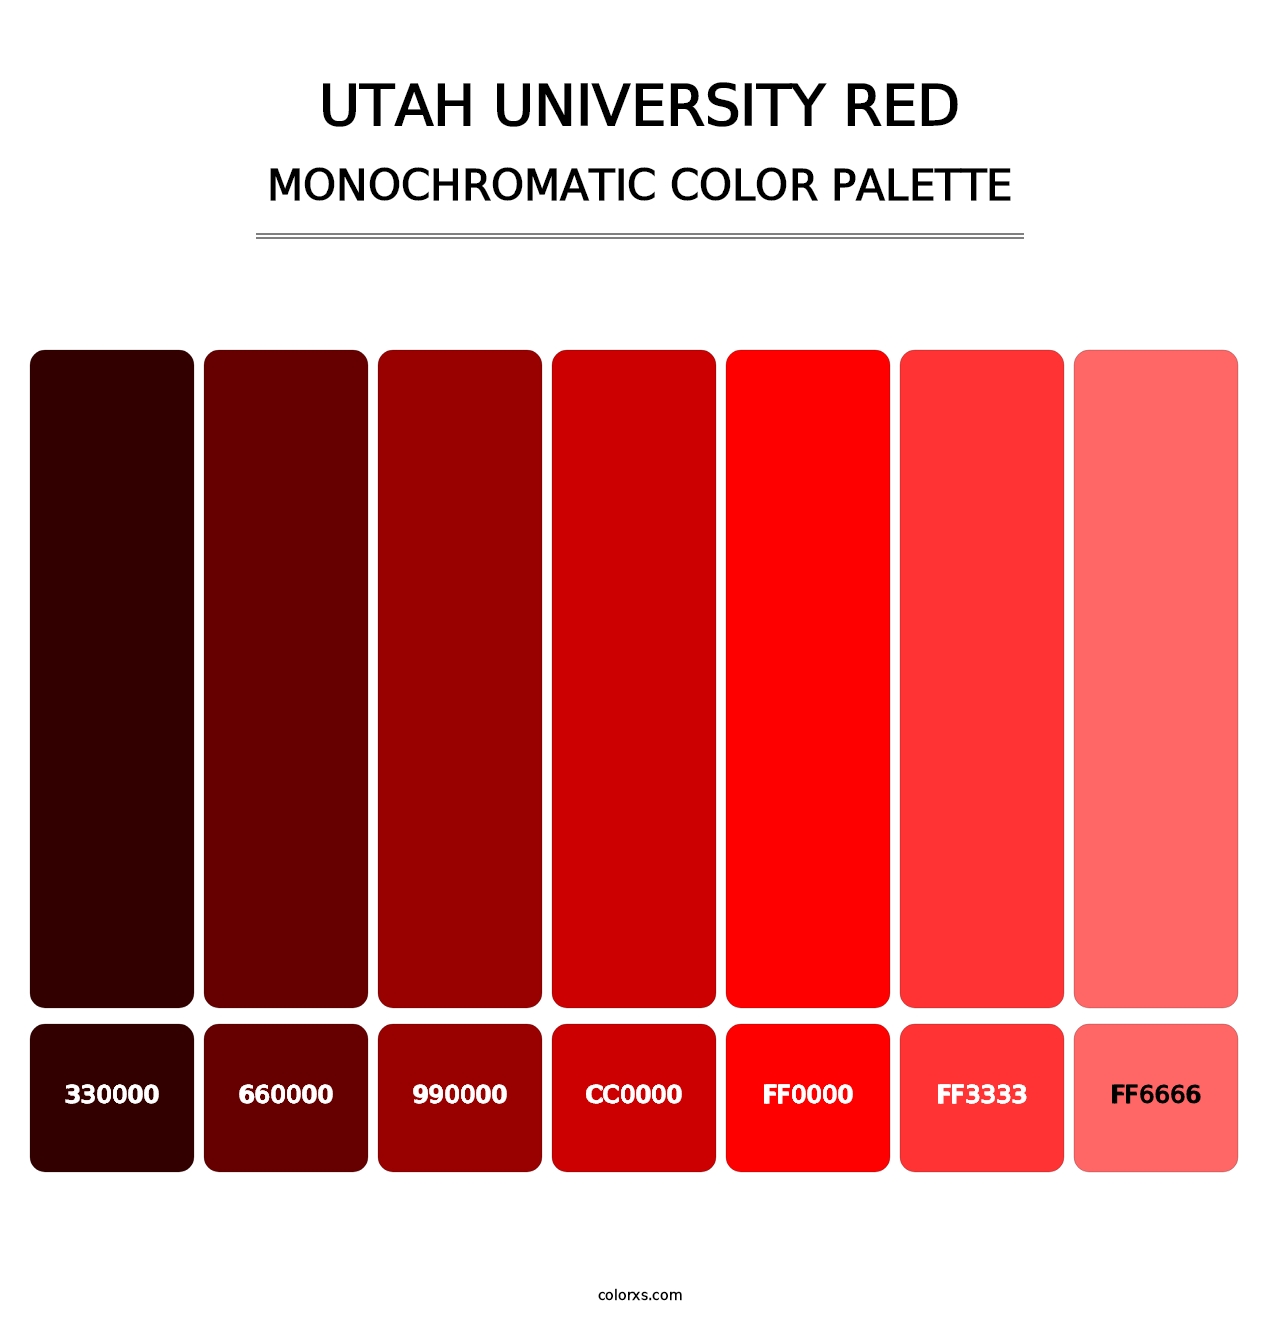 Utah University Red - Monochromatic Color Palette